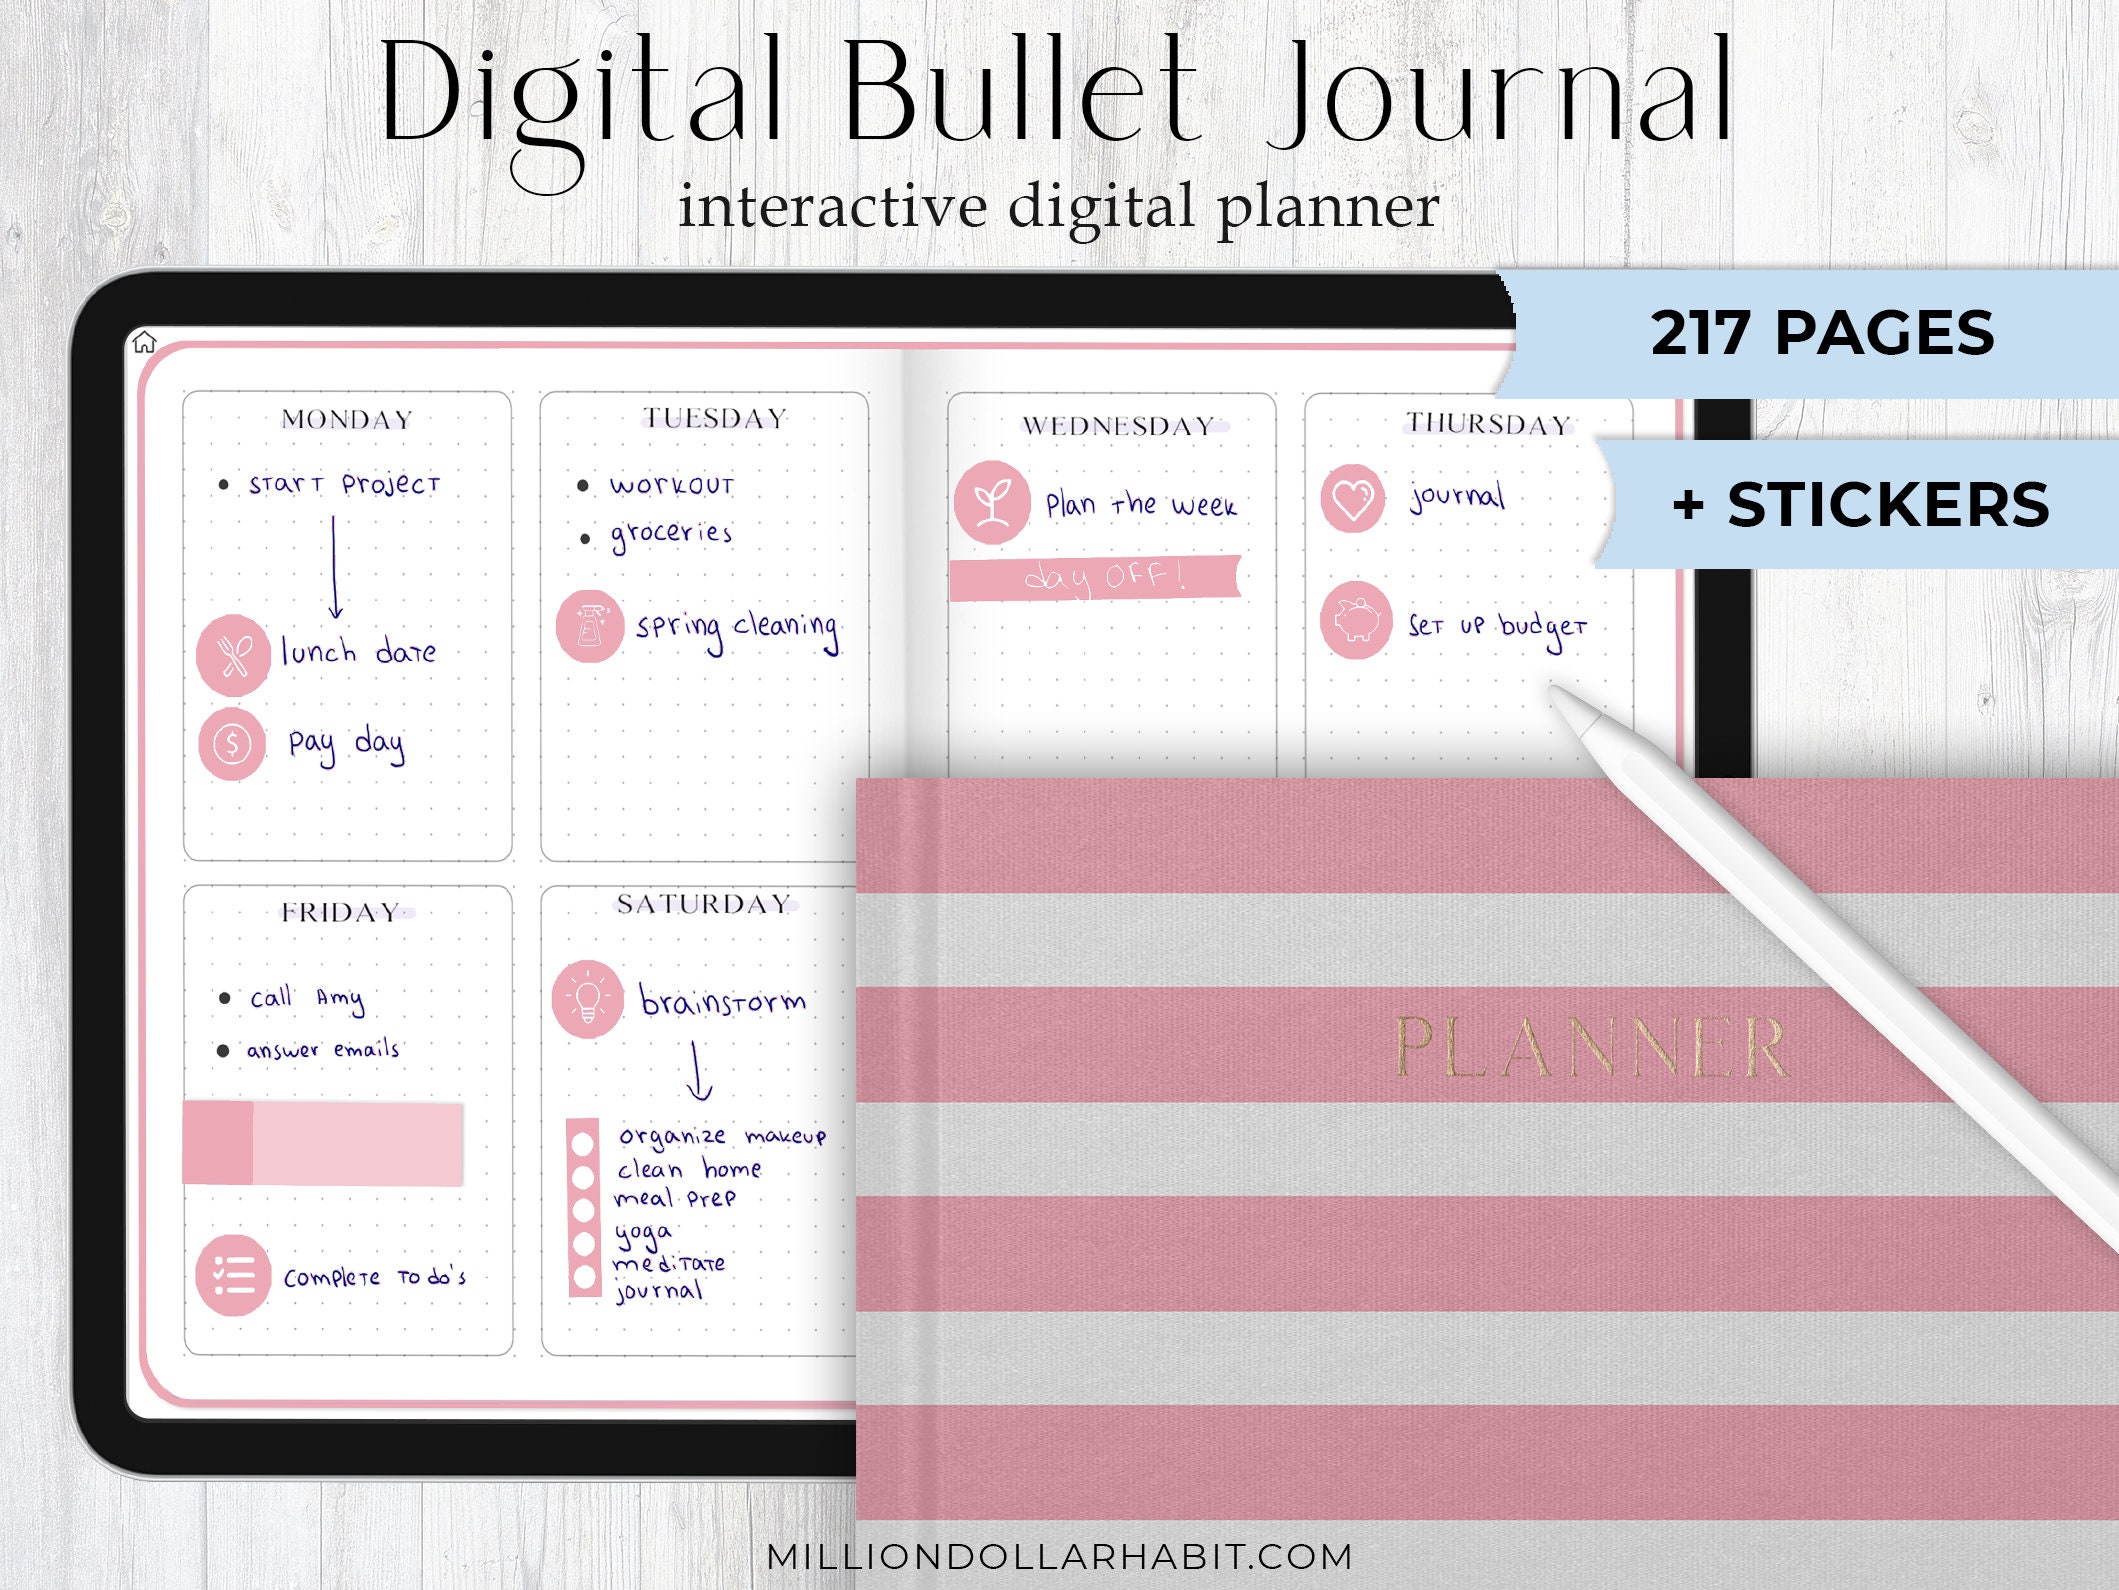 Digital Bullet Journal Undated Digital Journal Goodnotes | Etsy